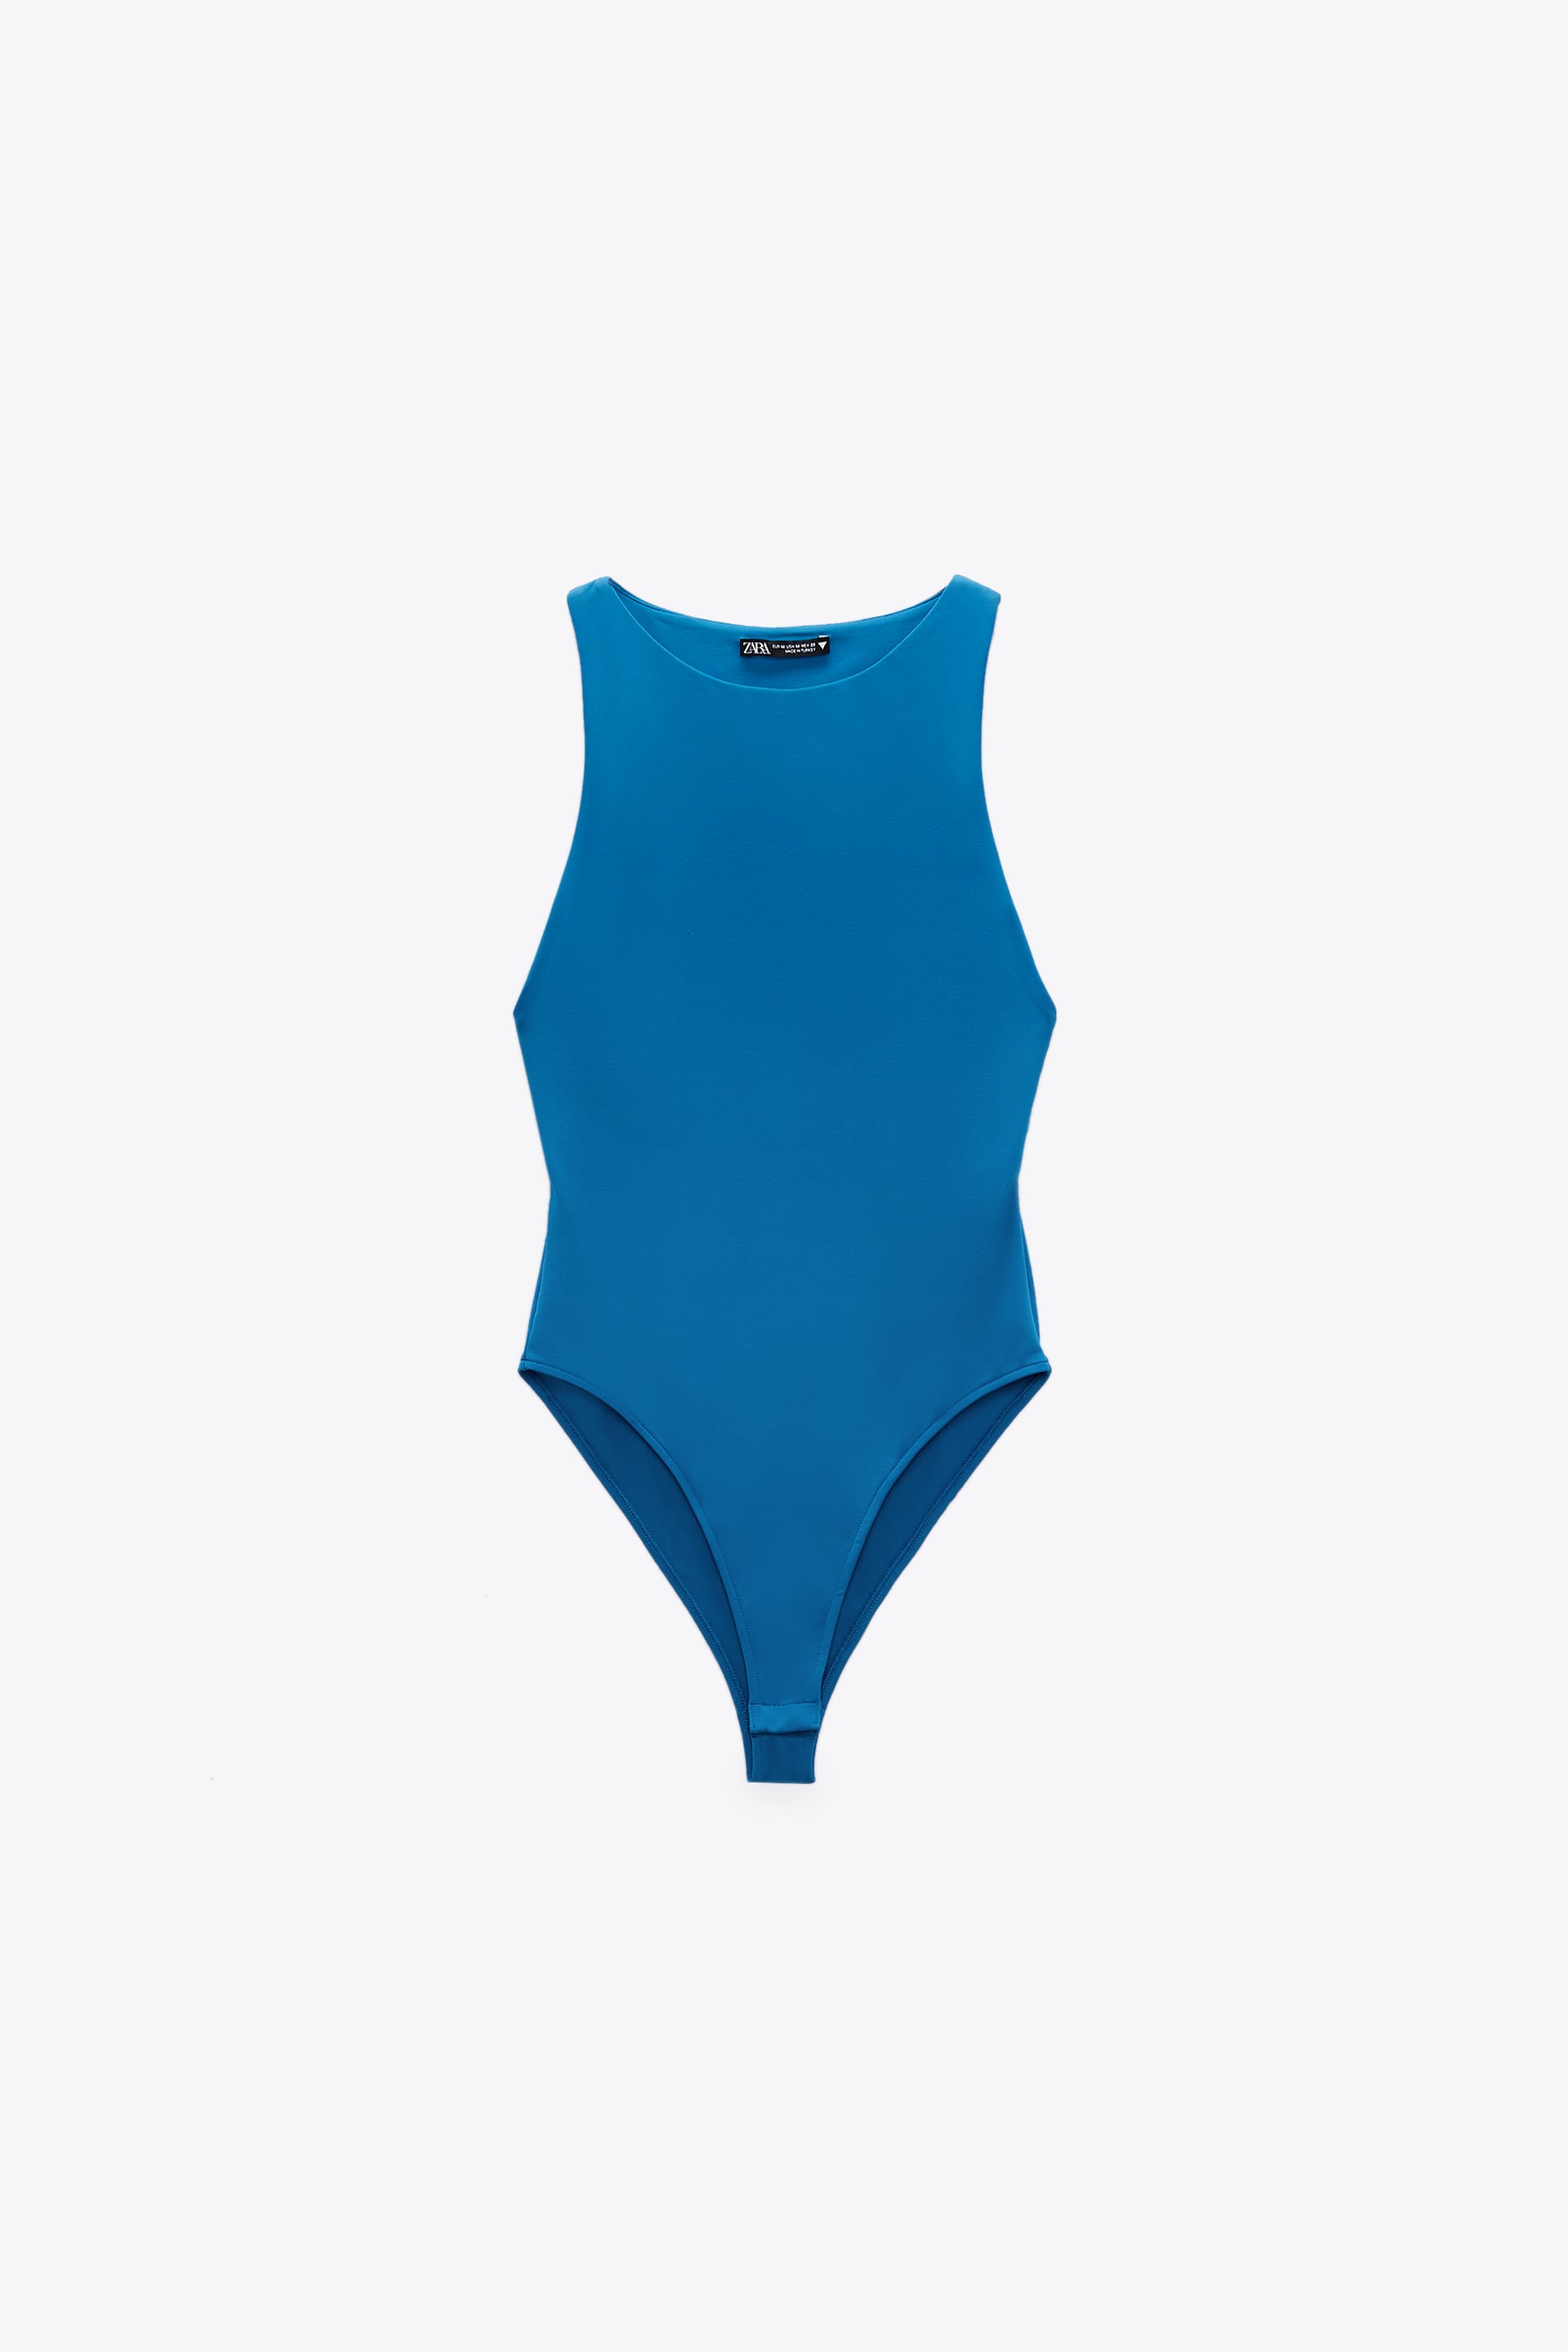 Navy Blue Bodysuit Shop Cheap, Save 45% | jlcatj.gob.mx